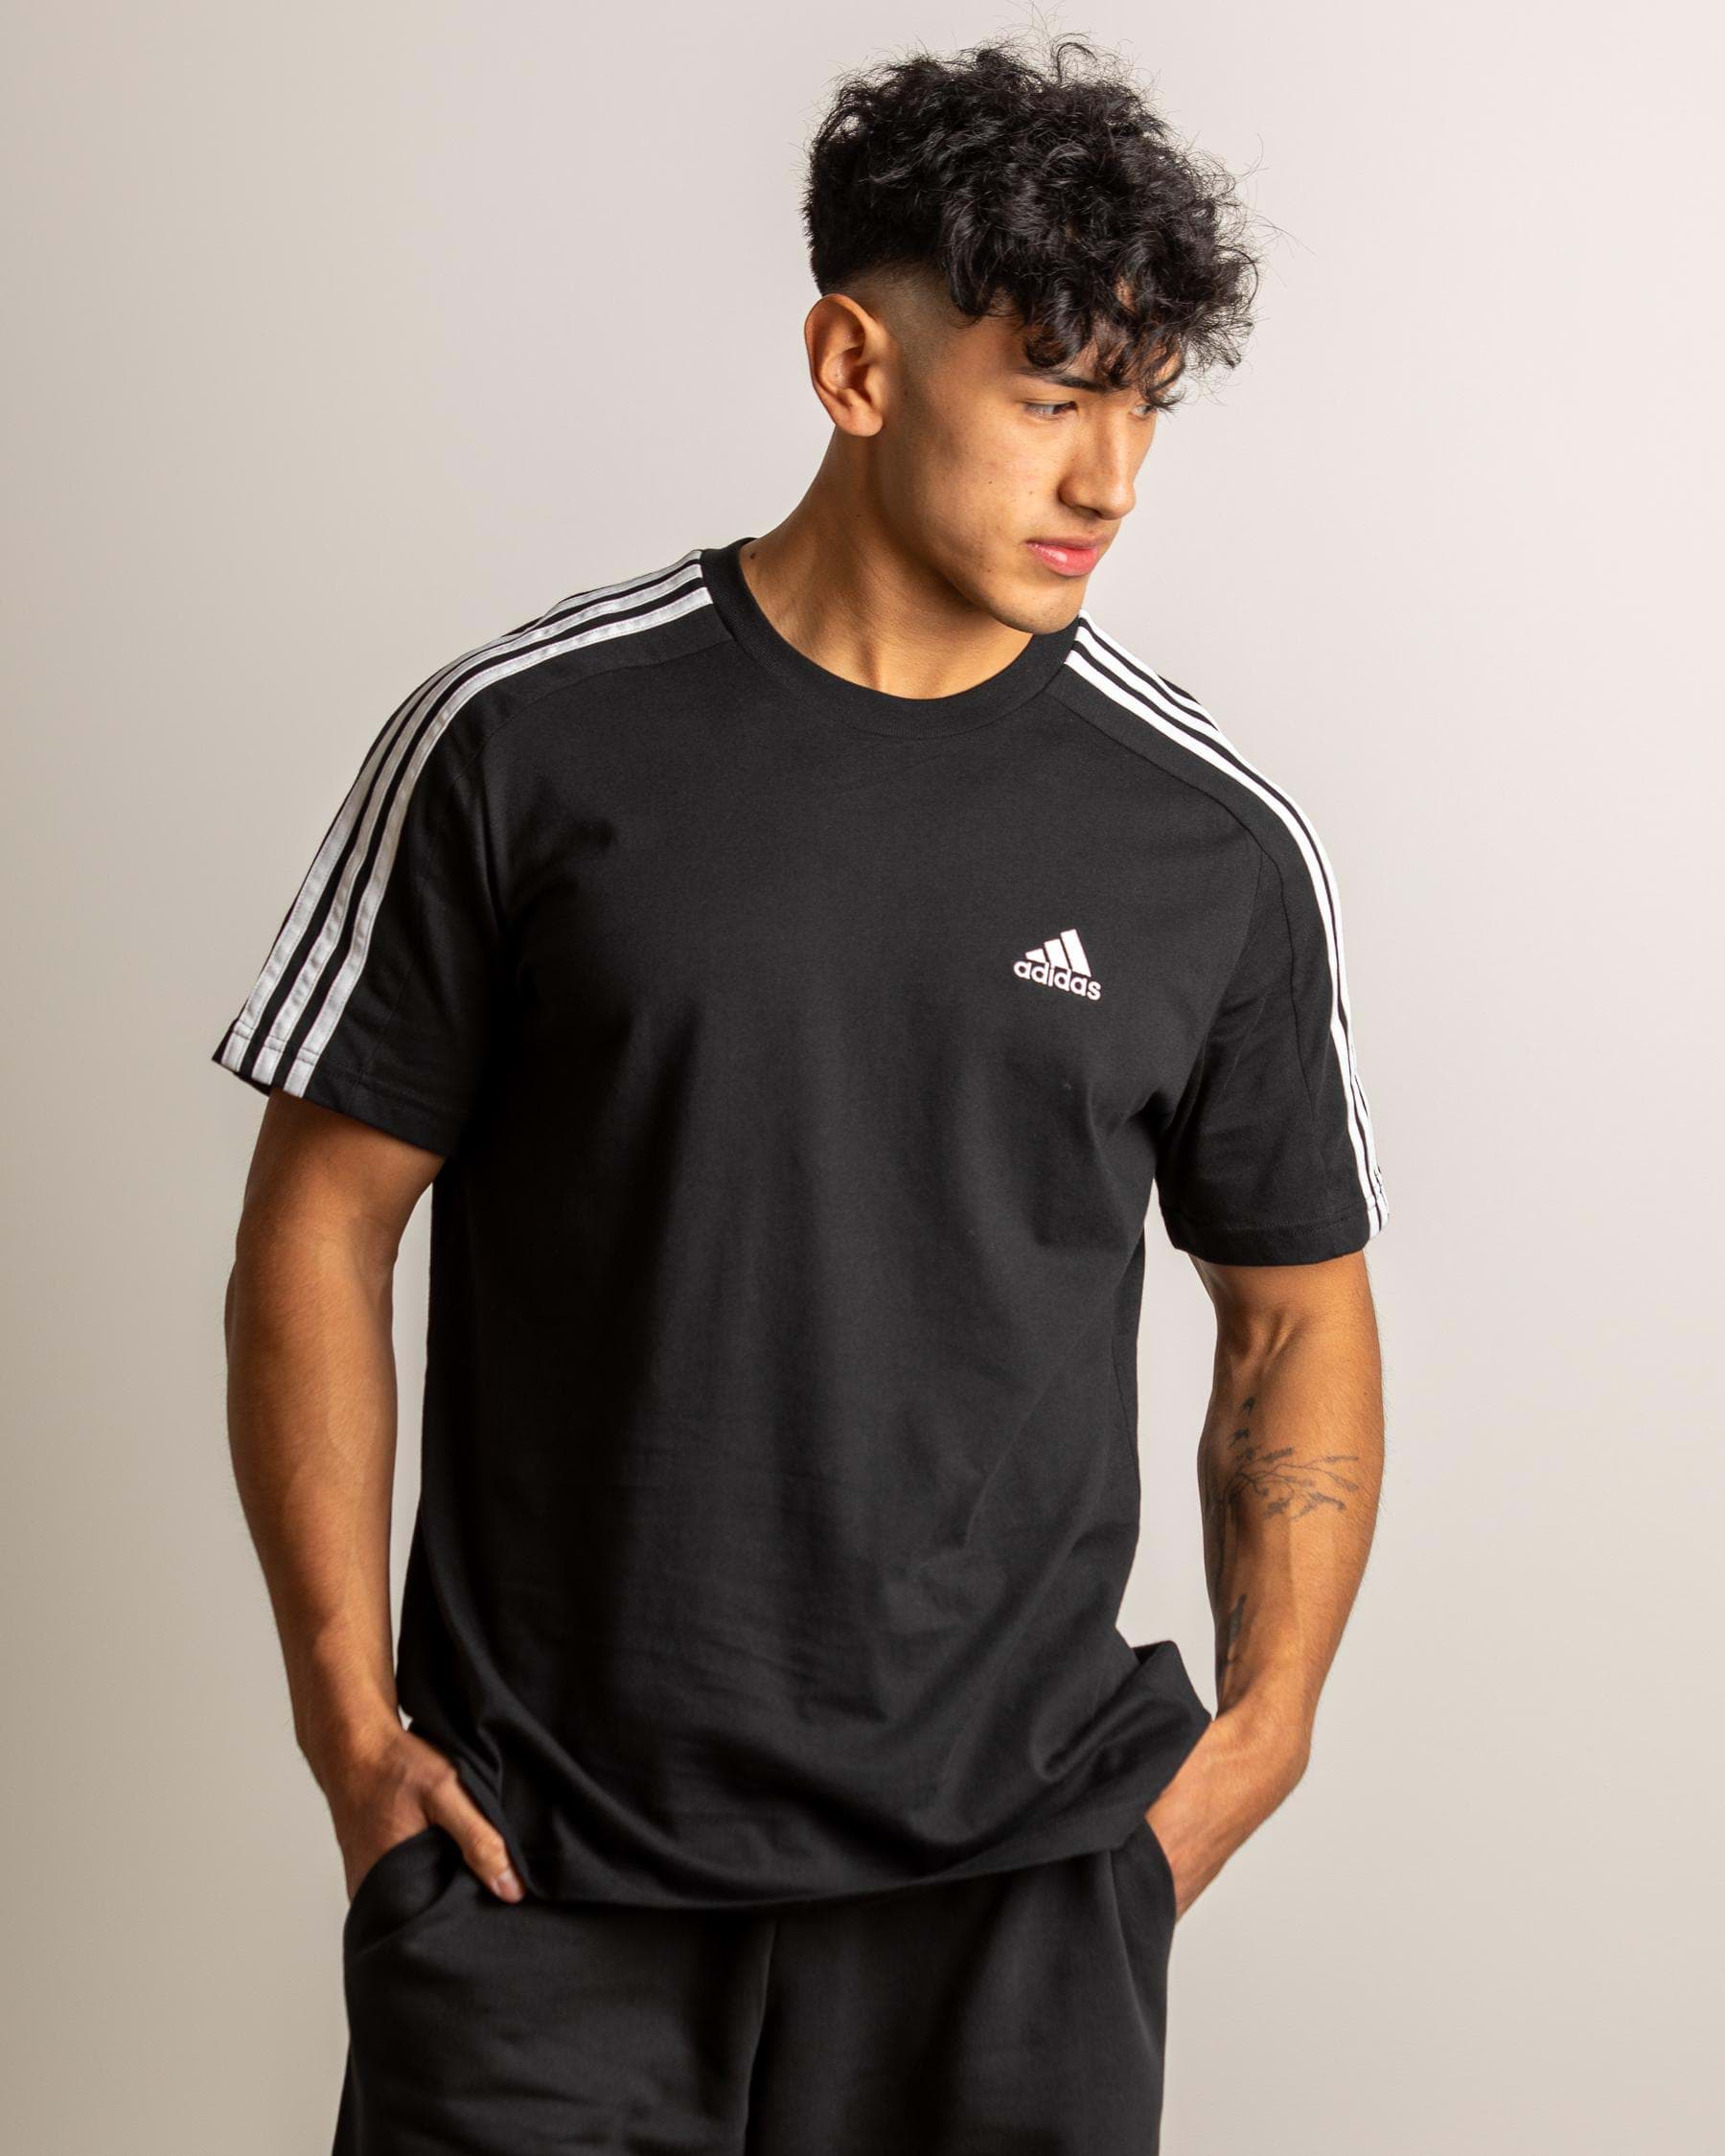 Adidas 3-Stripe T-Shirt In Black/white - Fast Shipping & Easy Returns ...